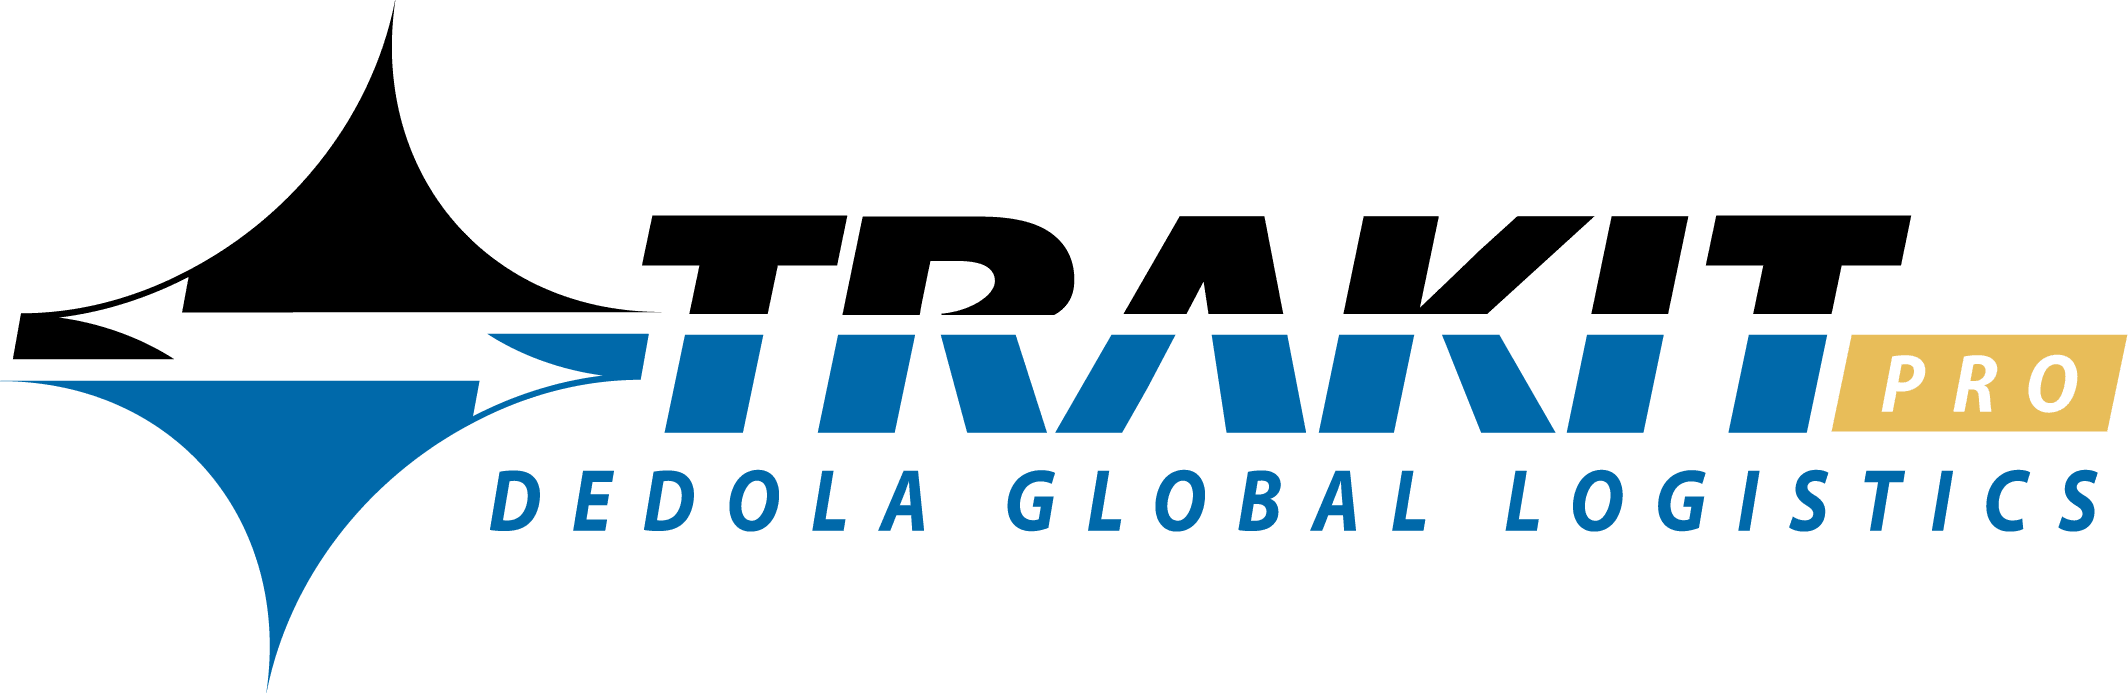 trakit pro tracking platform